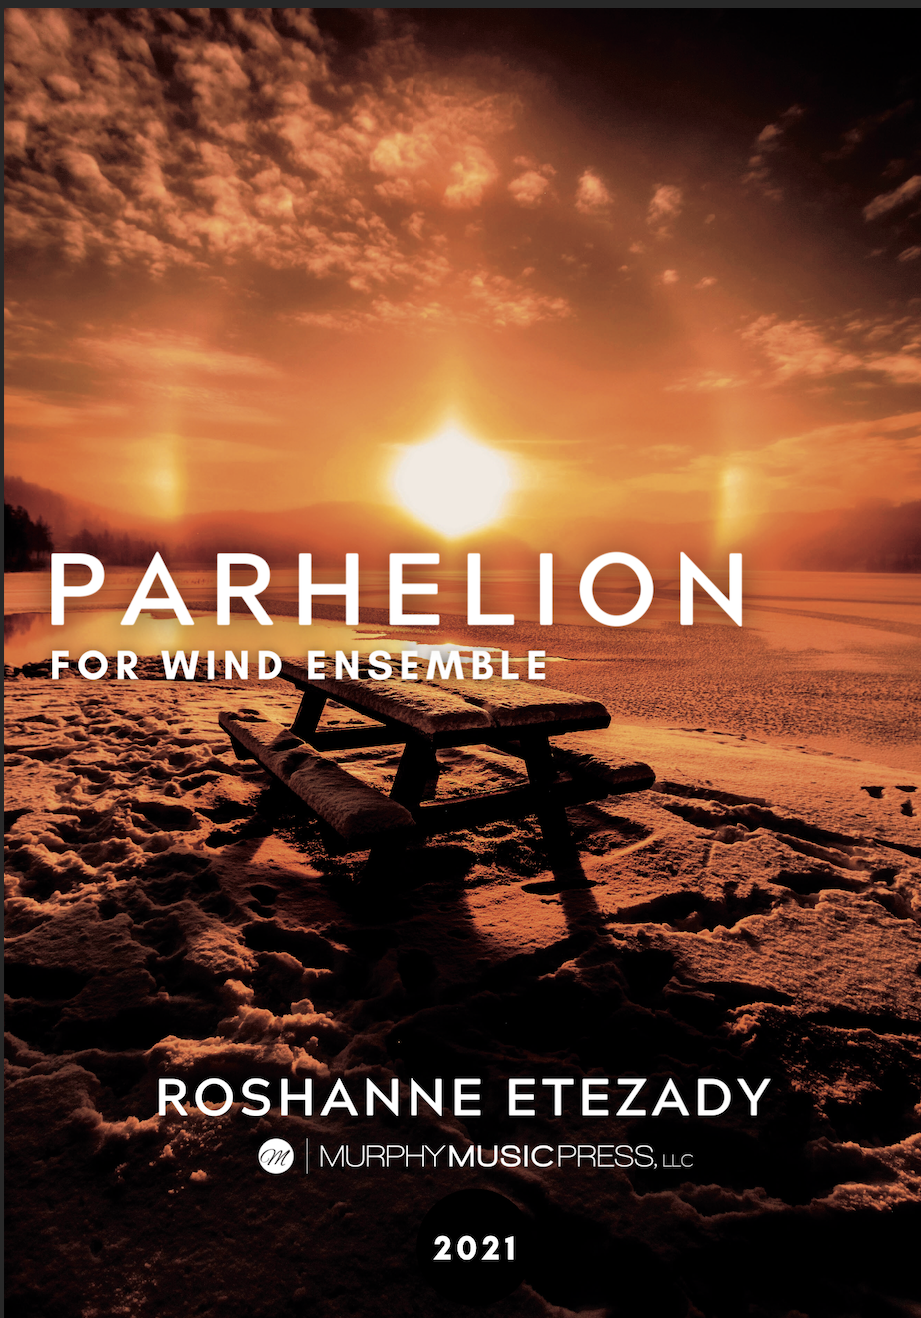 Parhelion by Roshanne Etezady